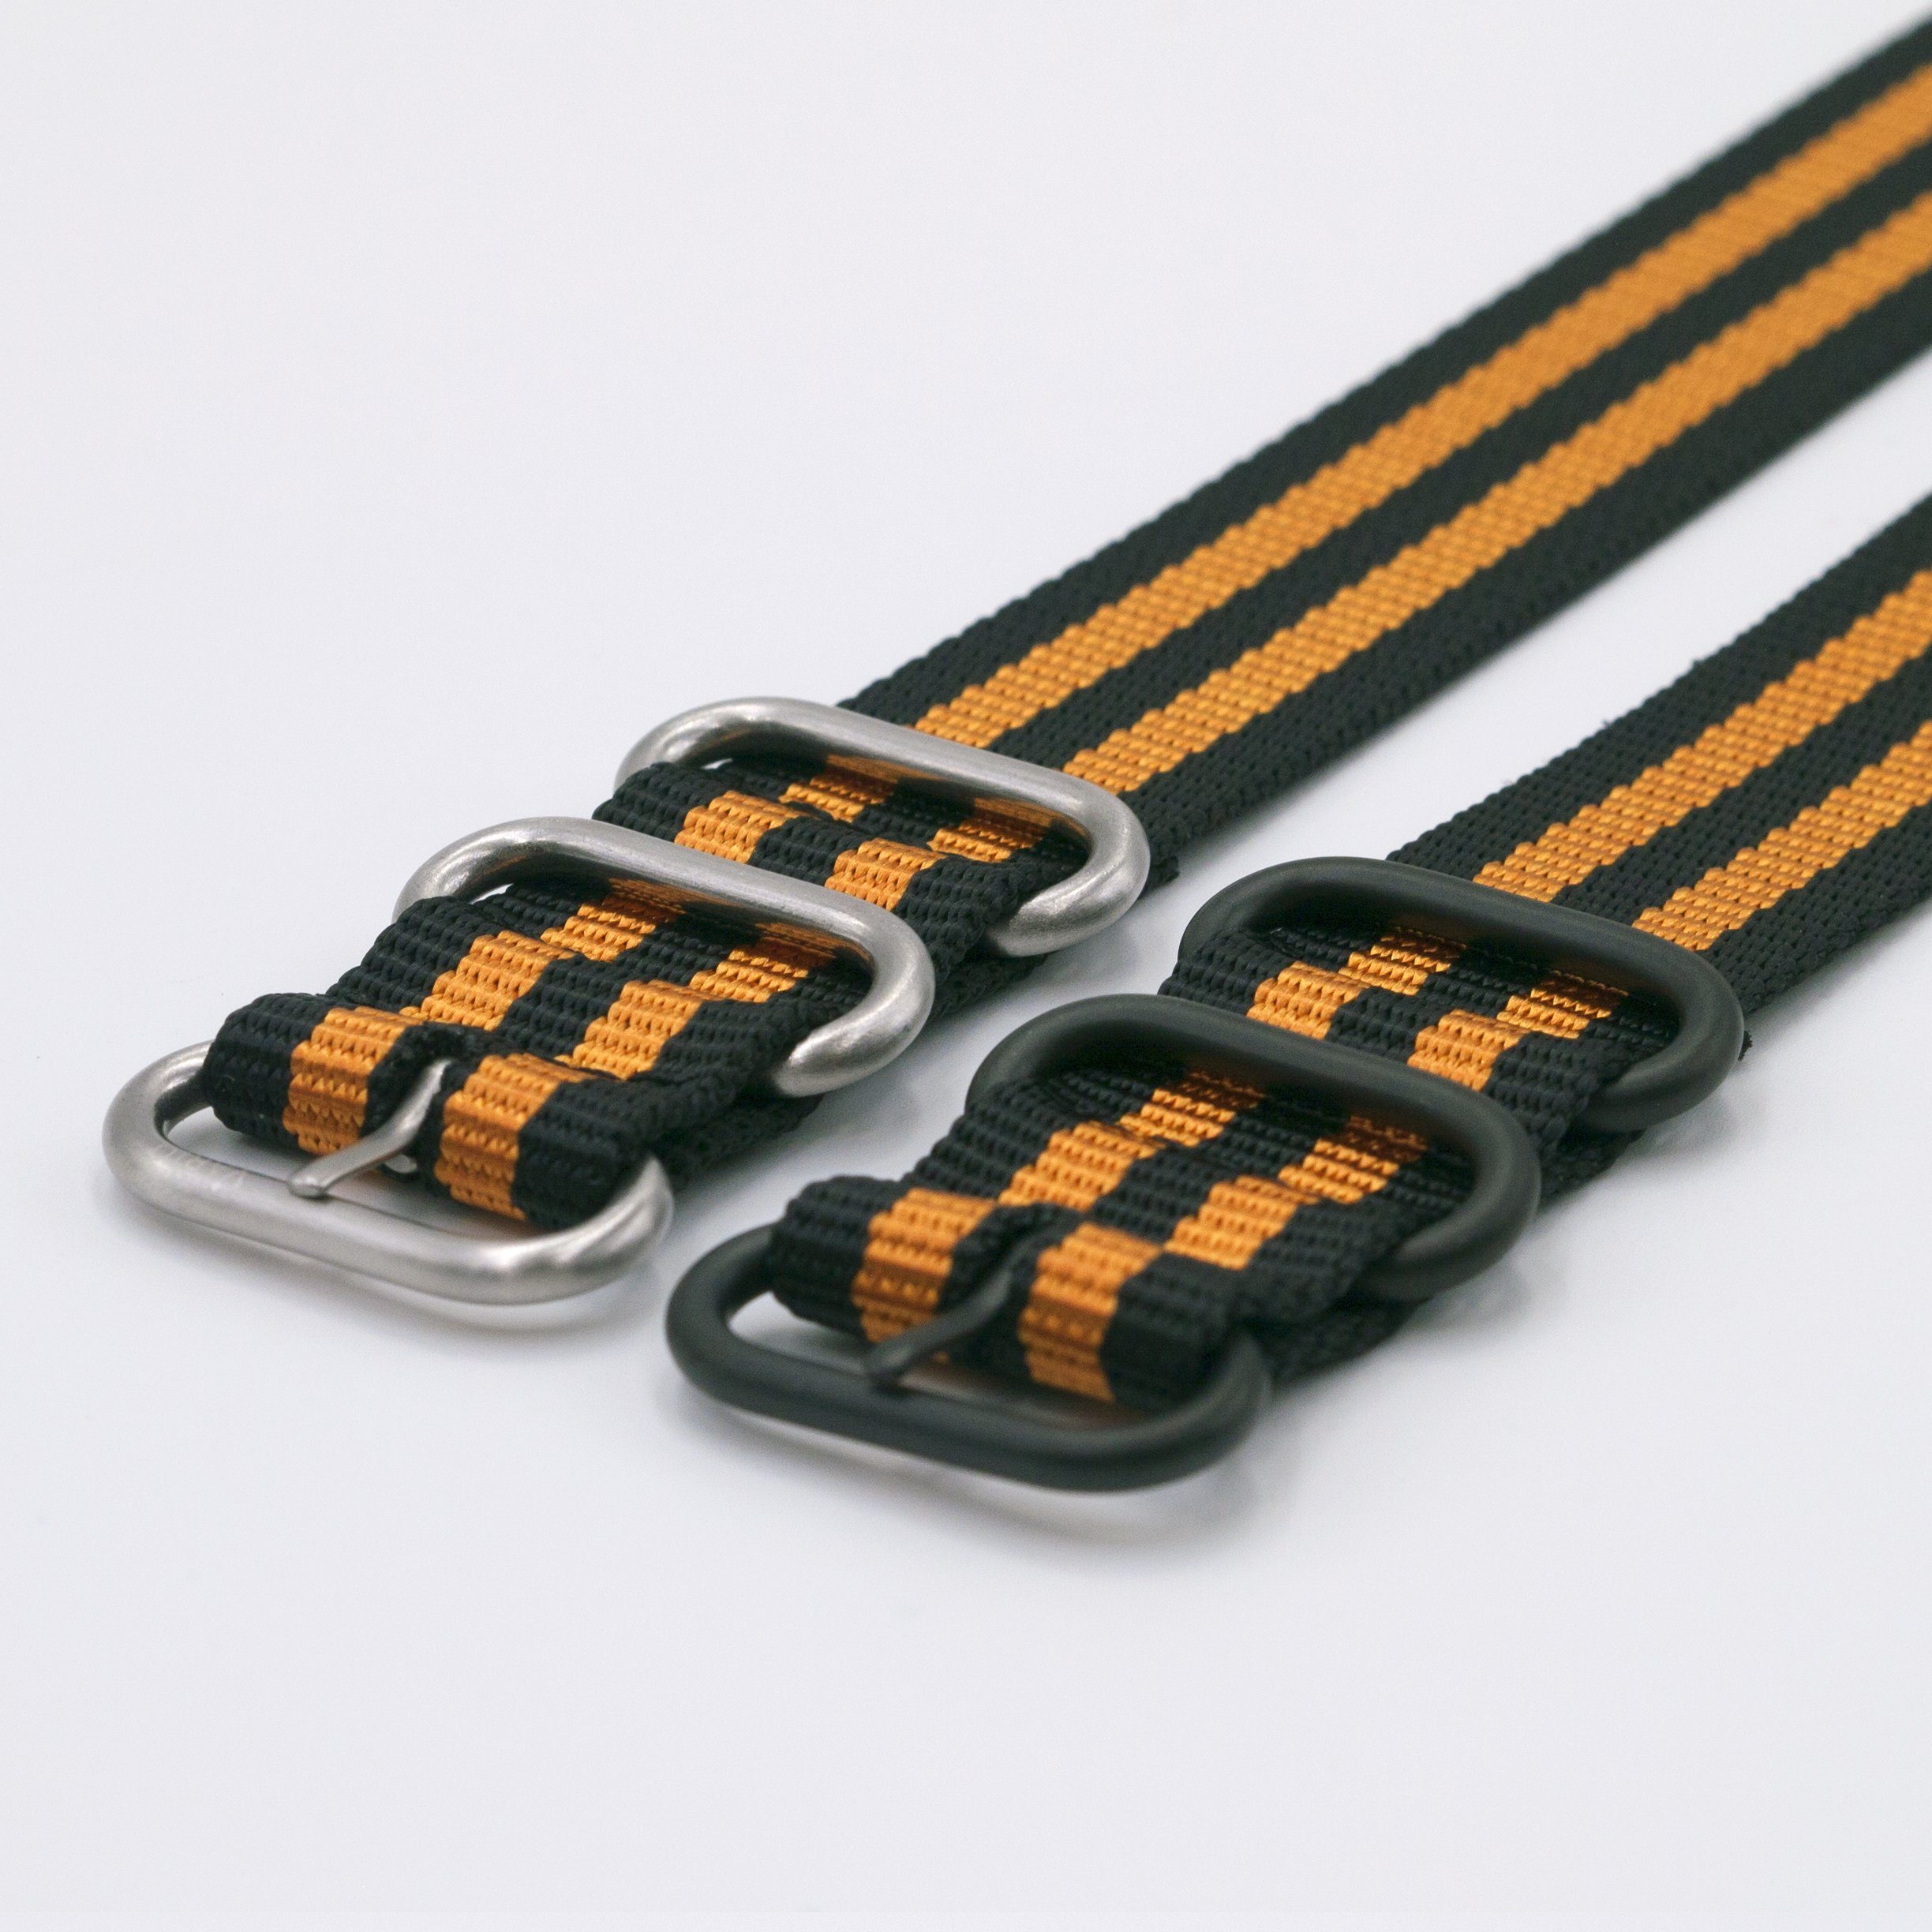 vario ballistic nylon blue black stripe maratac strap with casio g shock adapter